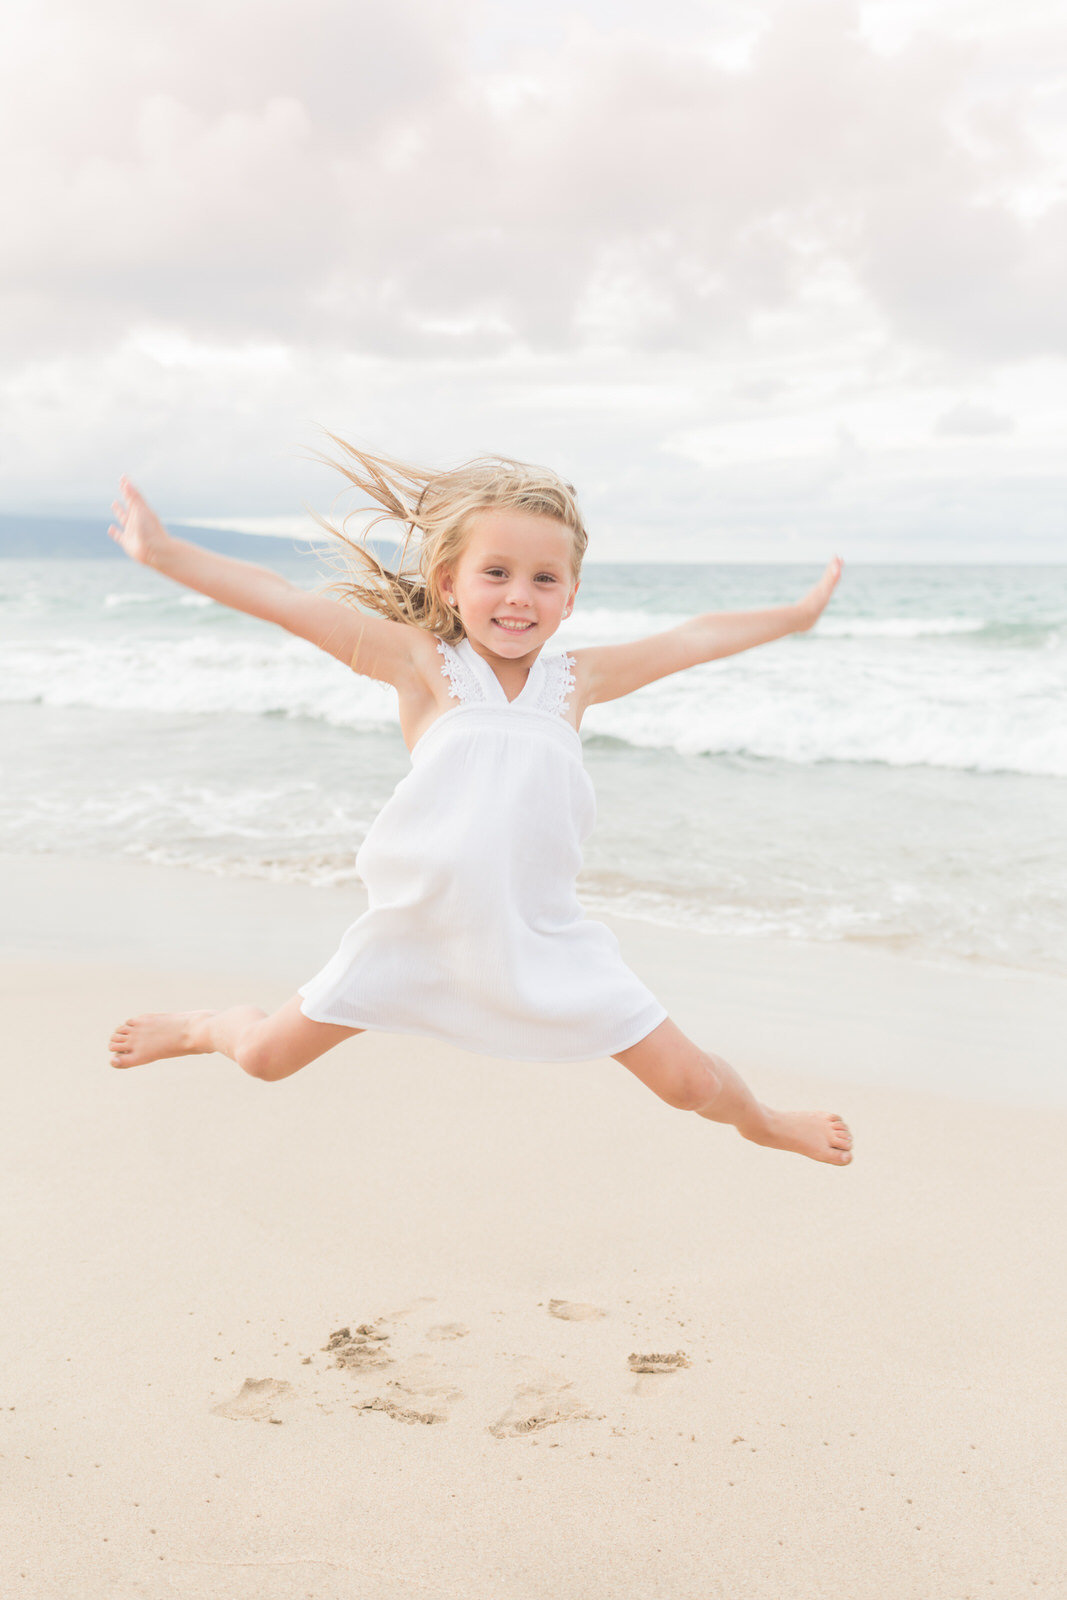 Maui family photography - girl jumping